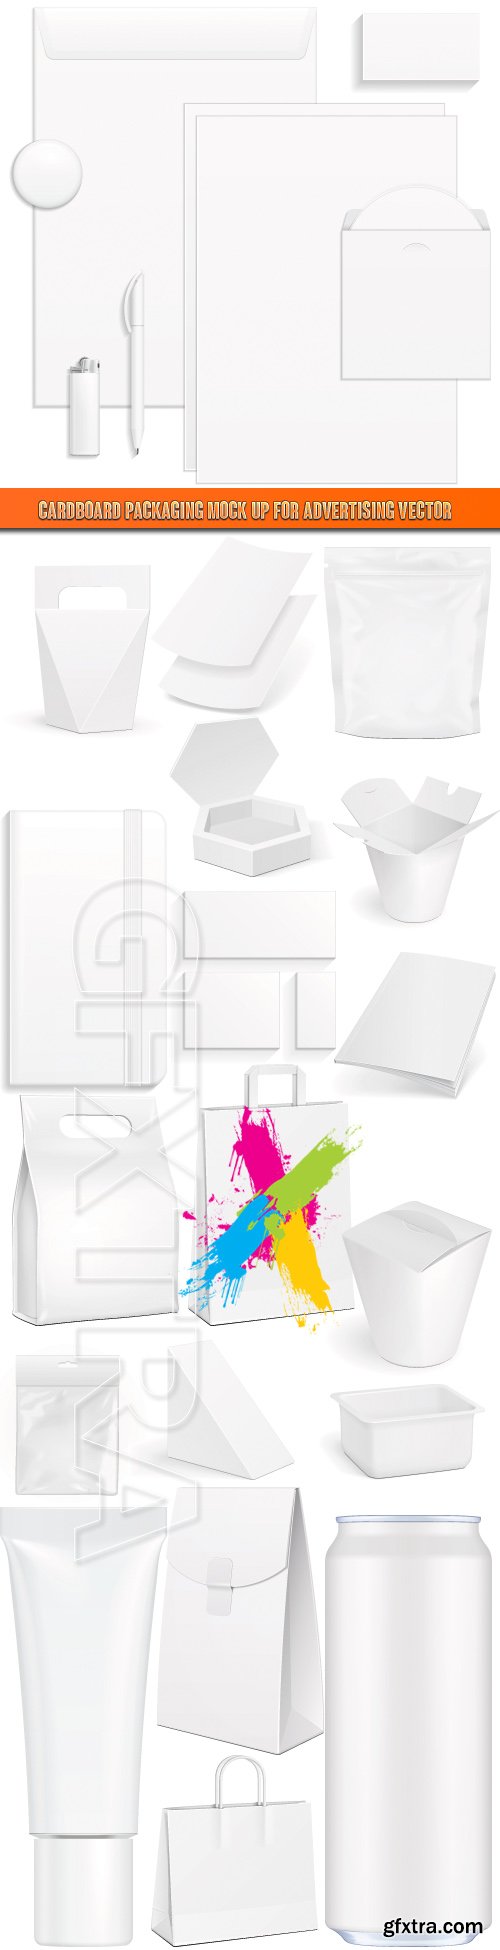 Cardboard packaging mock up for advertising vector